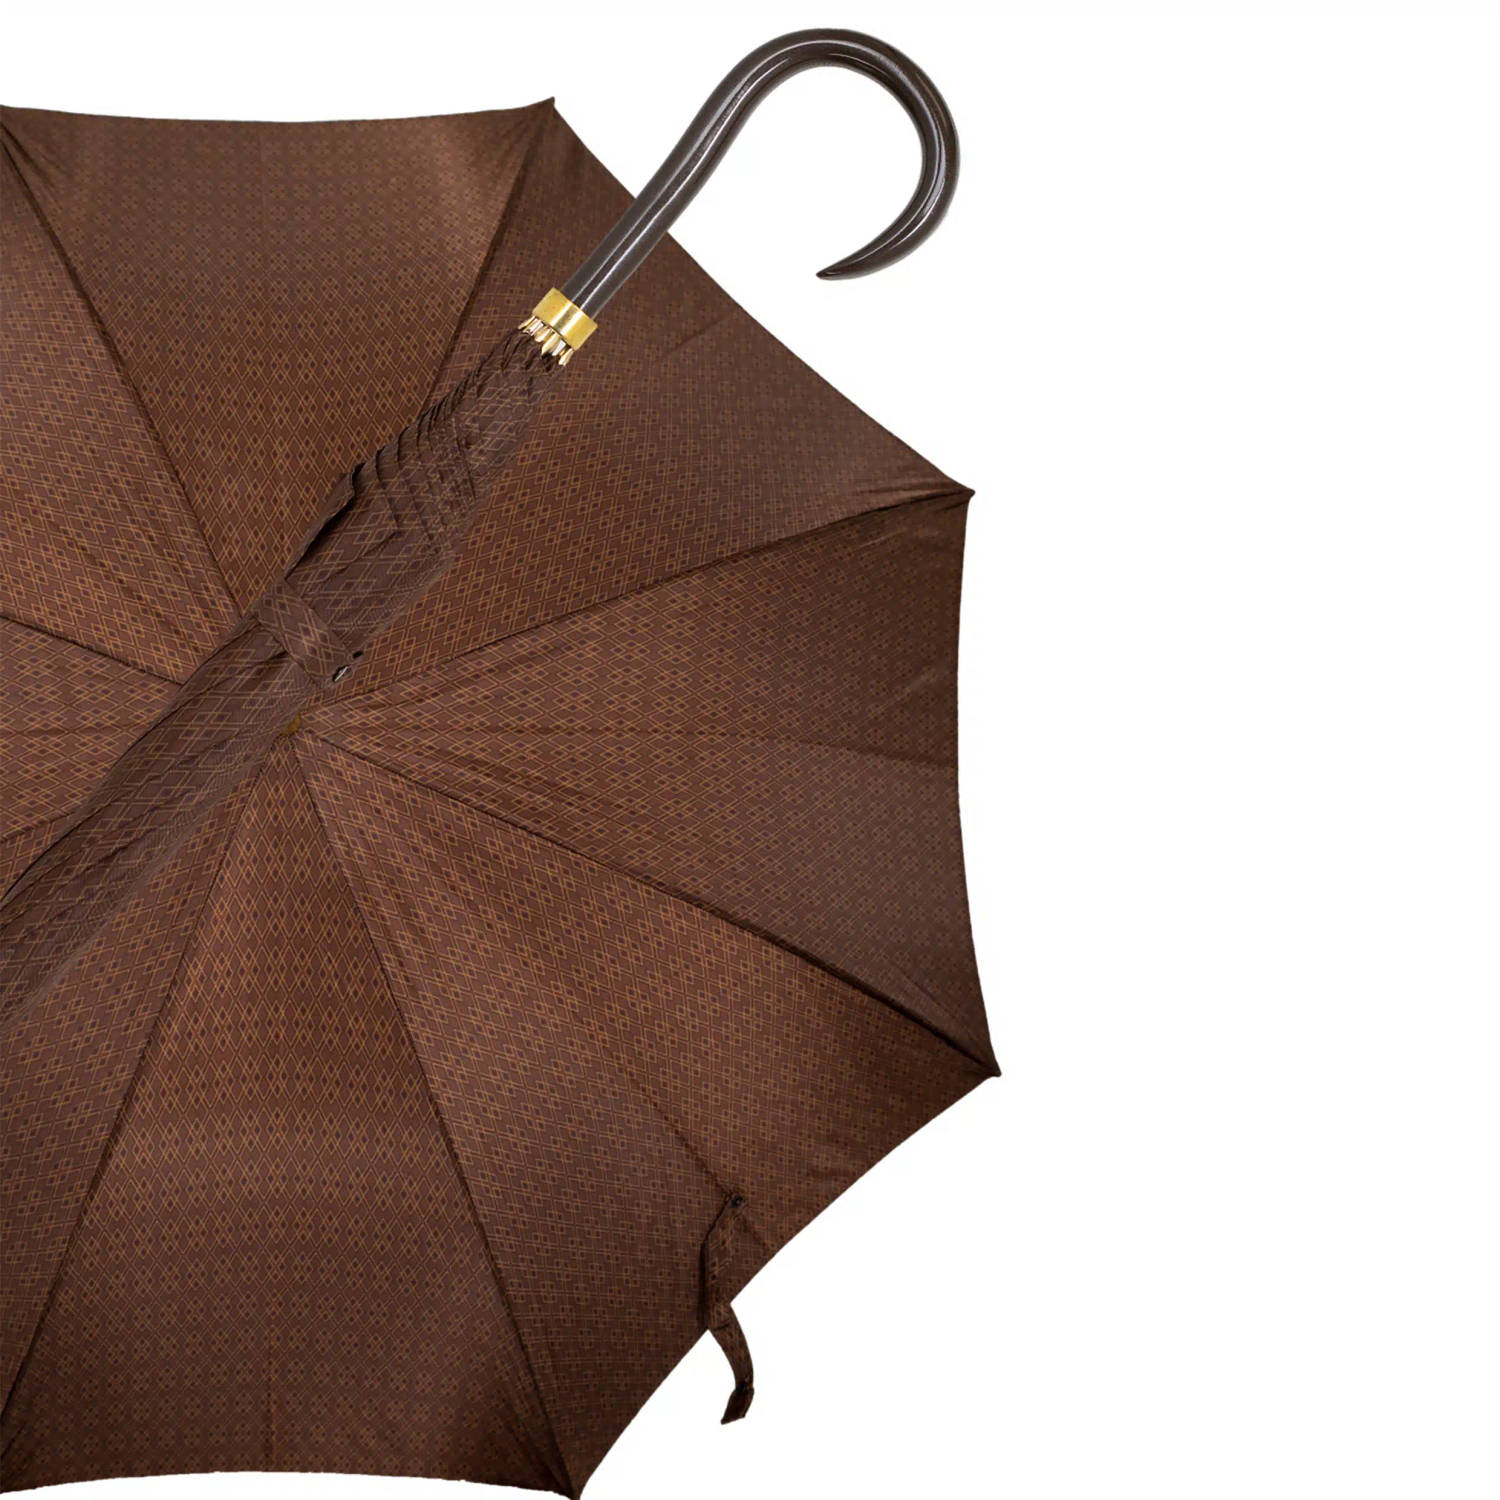 Gastrock Paraplu - Italiaanse satijn stof - Donkerbruin - Luxe paraplu - Lengte 91 cm - Doorsnede doek 61 cm - Aluminium frame - Handvat van metallic gelakt esdoornhout - Paraplu v